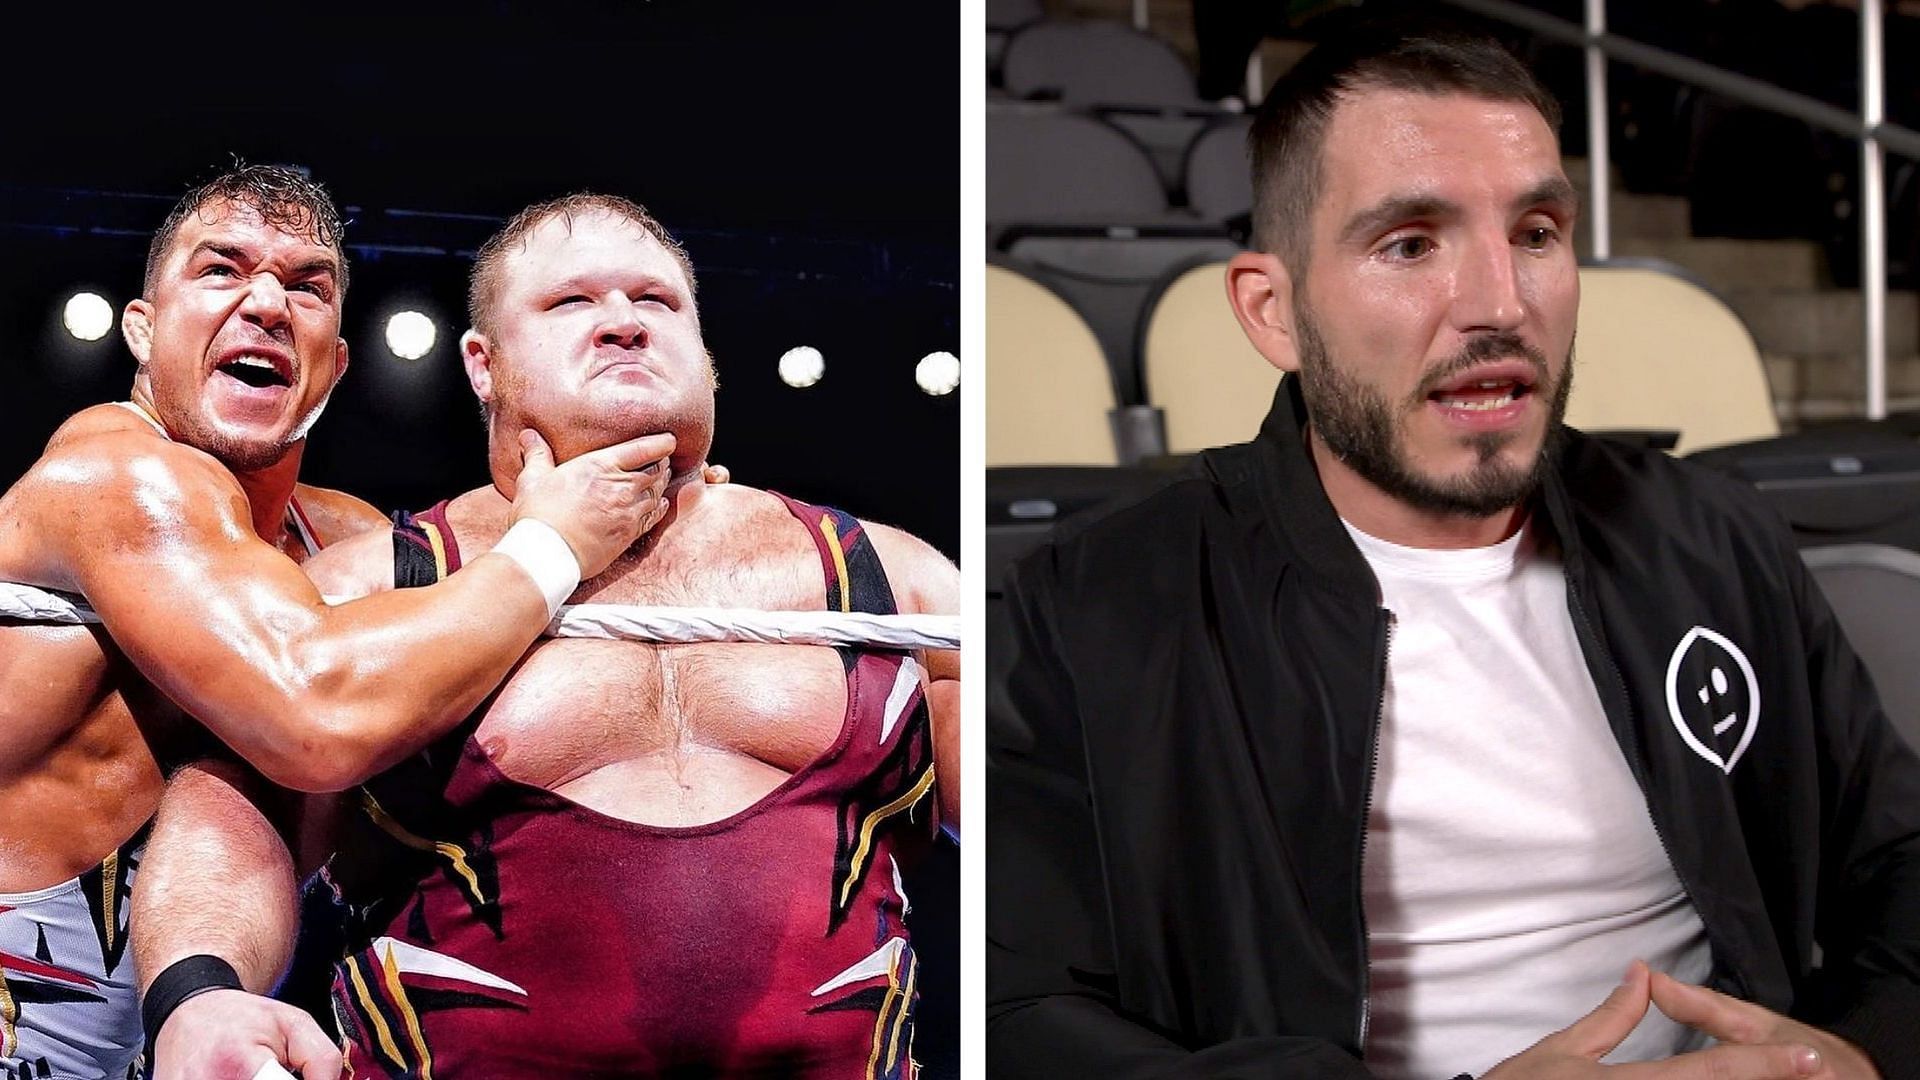 Otis and Johnny Gargano will battle on WWE RAW